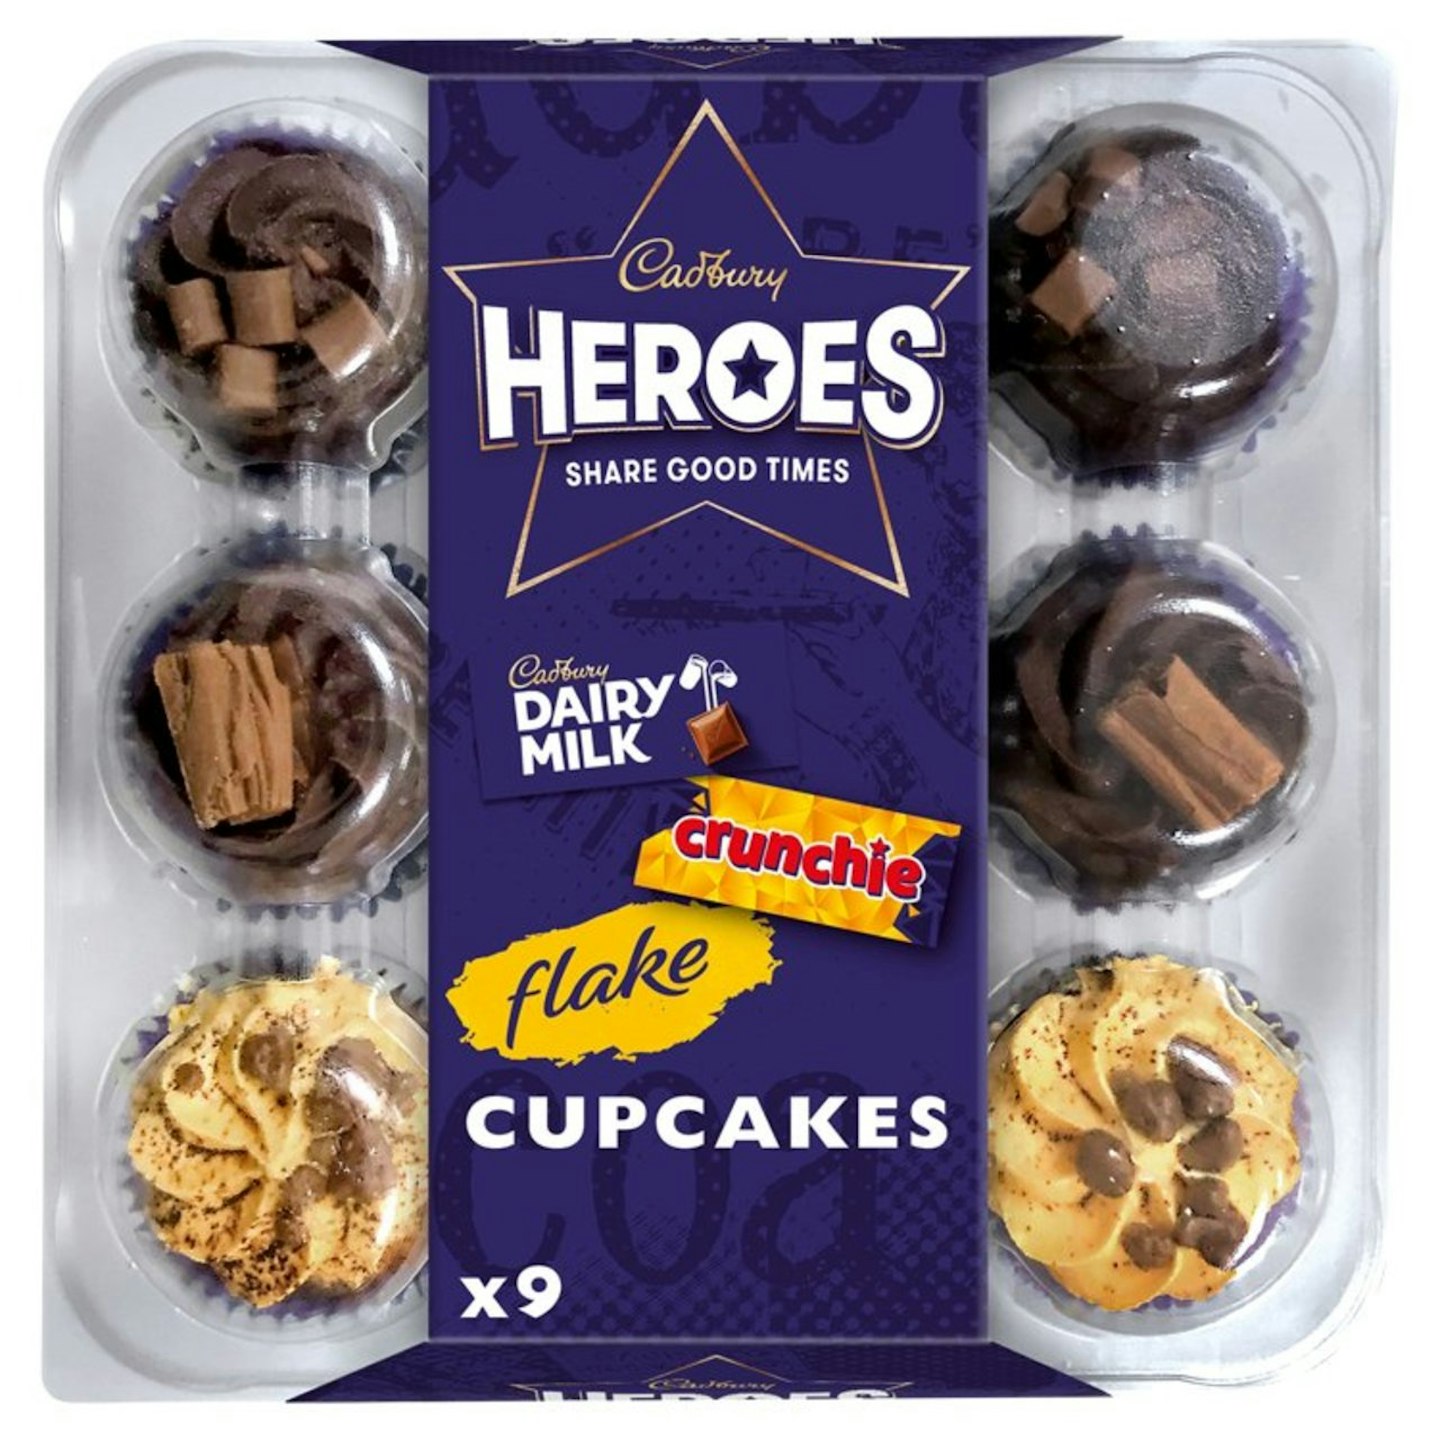 The best supermarket birthday cakes: Cadbury Heroes Cupcakes